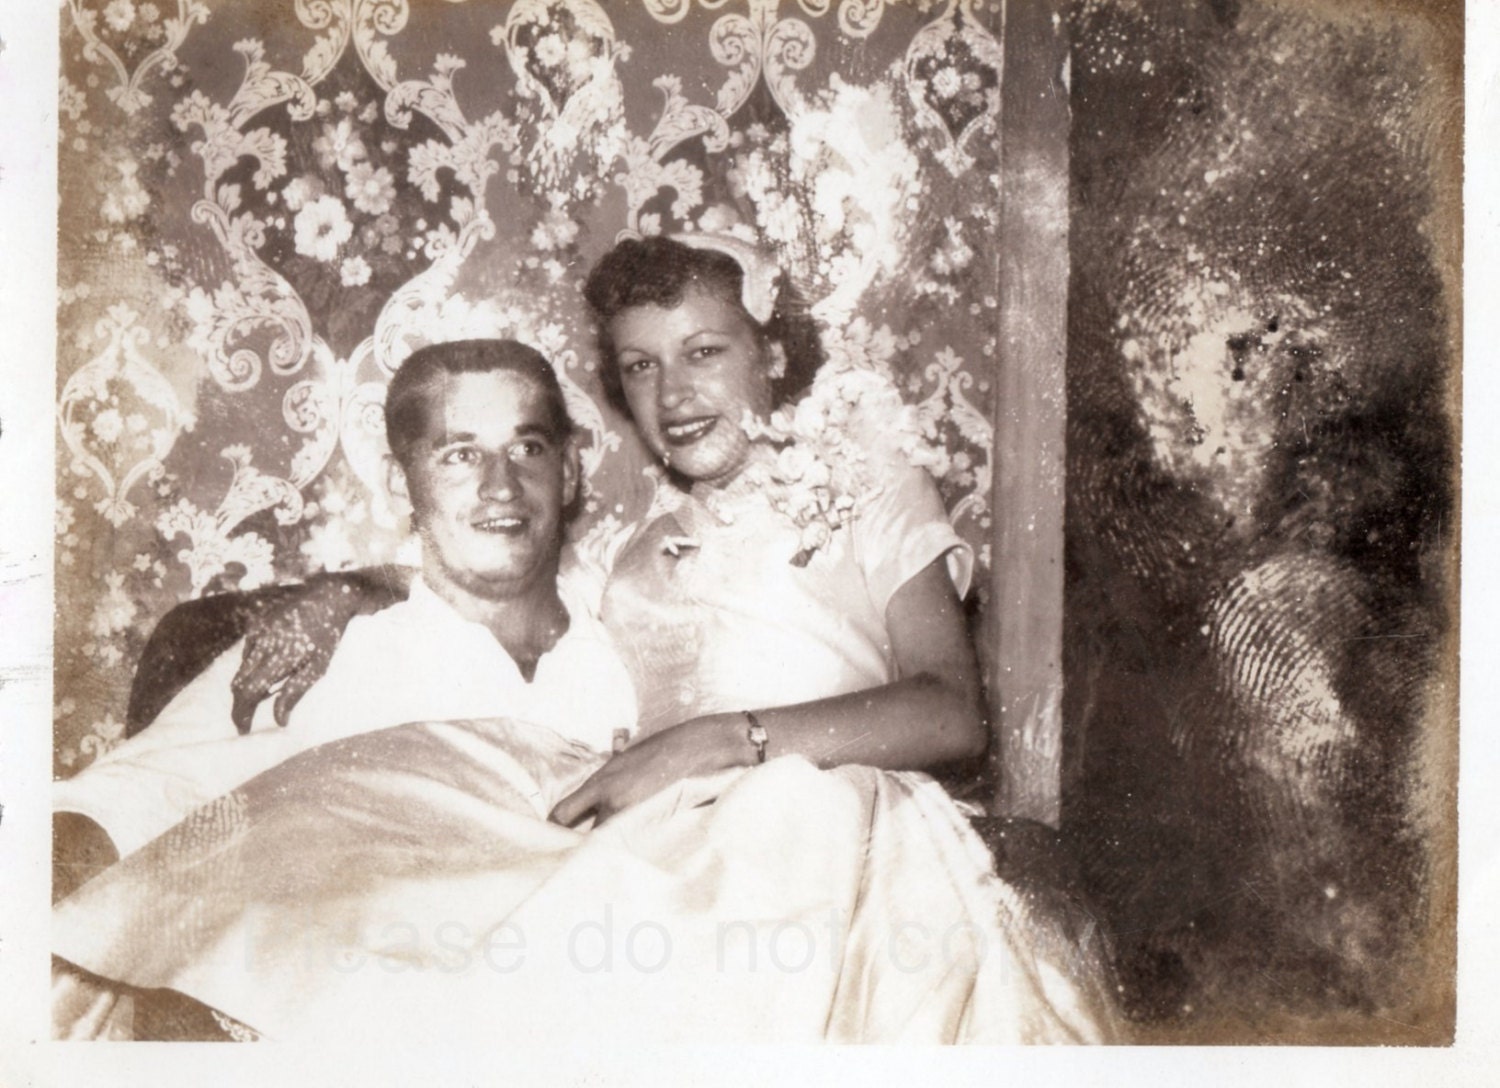 Wedding Day Polaroid Snapshot Vintage Photo By Photopicker